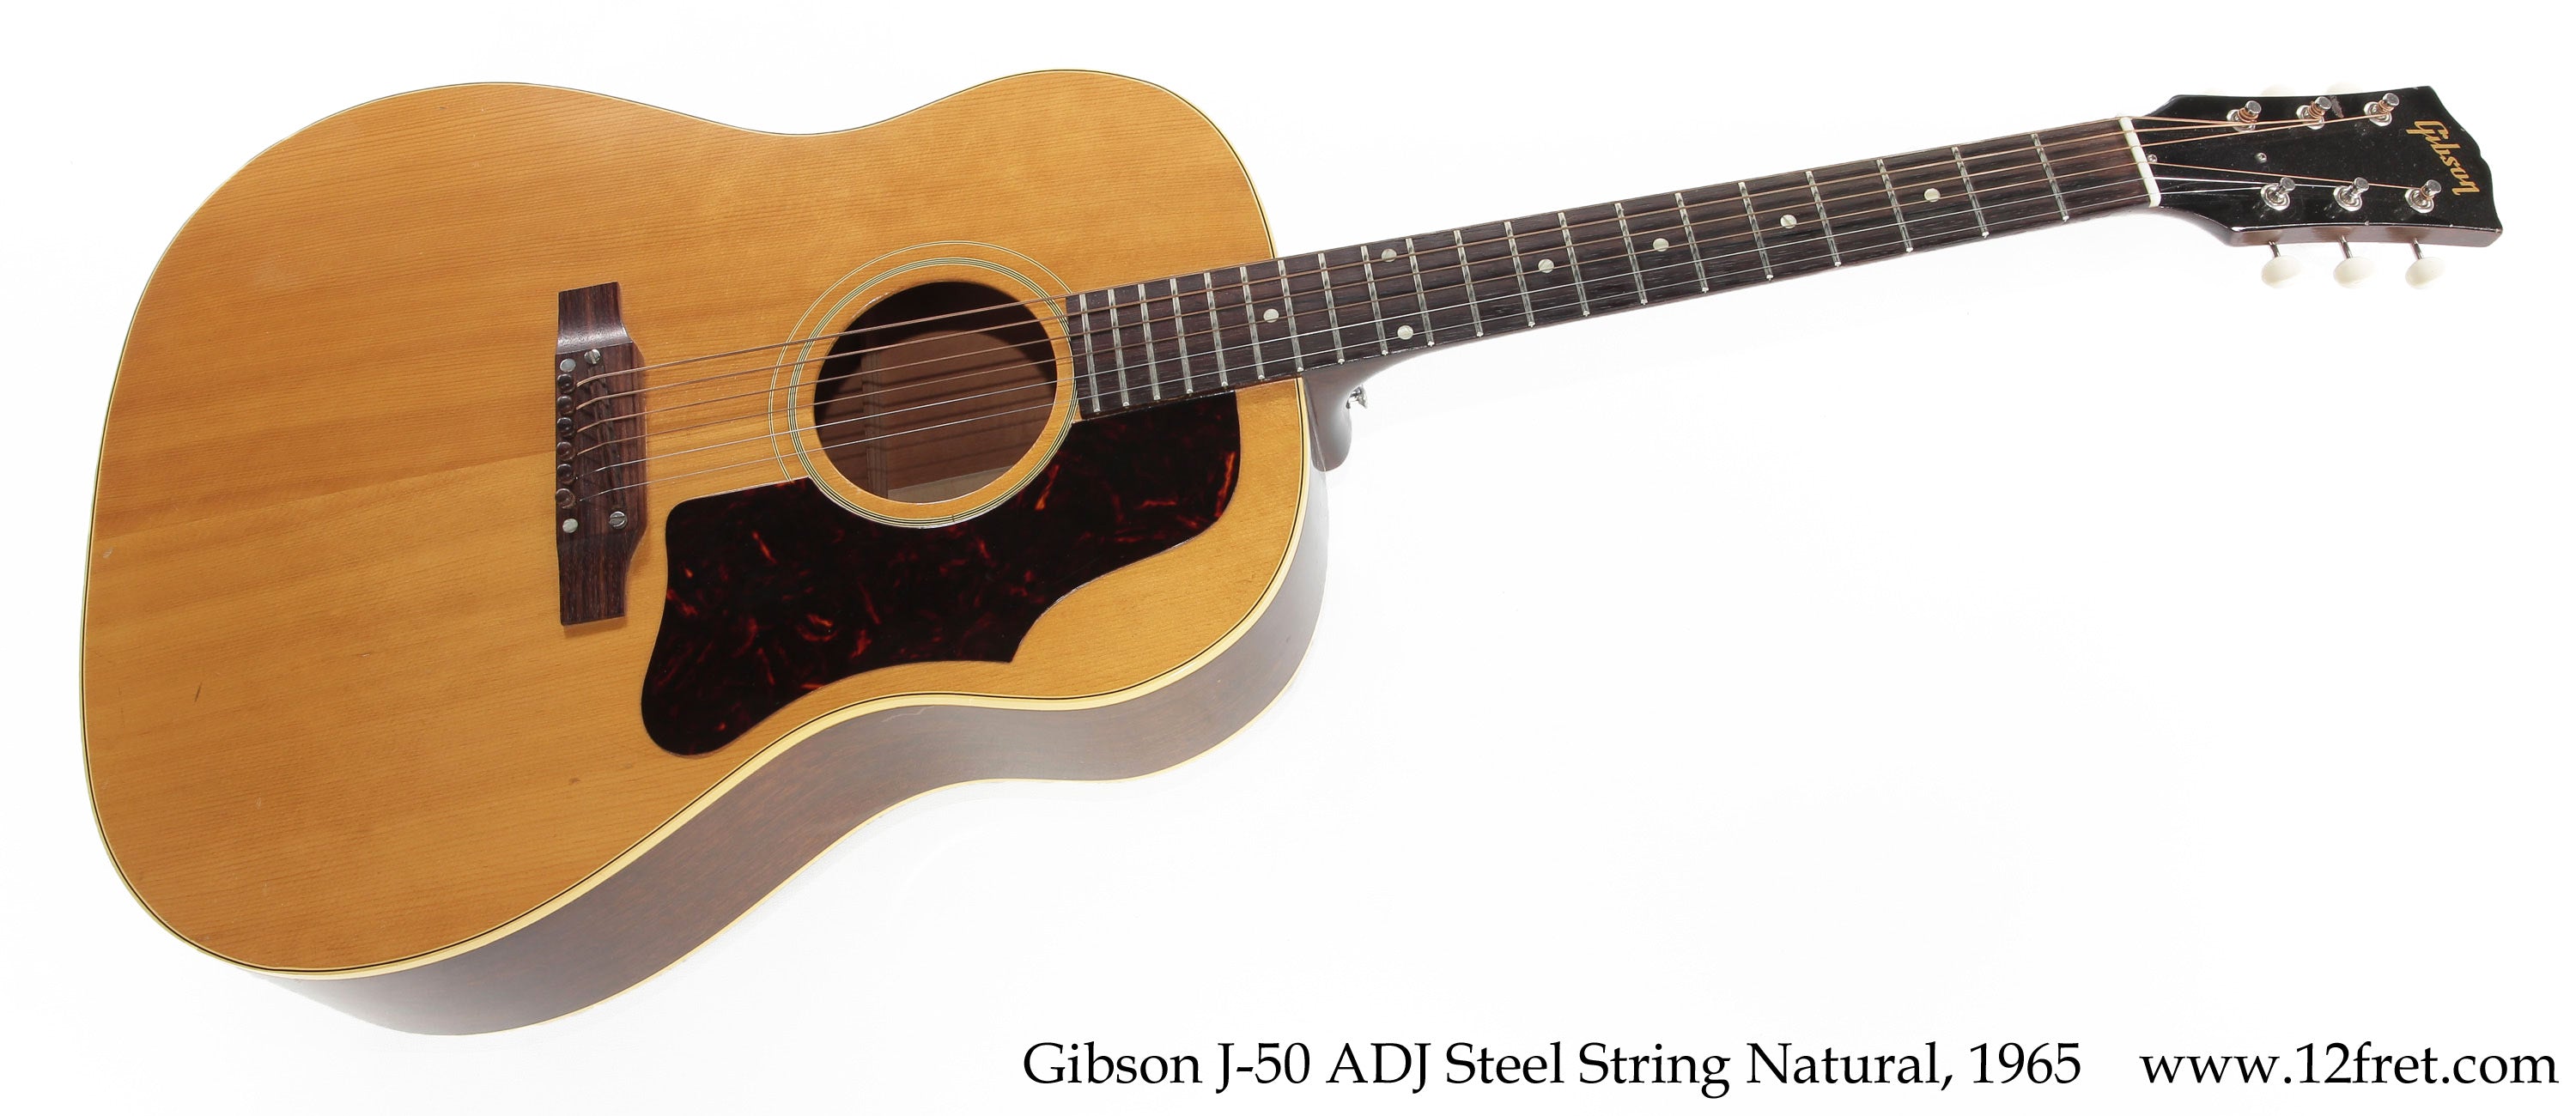 Gibson J-50 ADJ Steel String Natural, 1965 - The Twelfth Fret